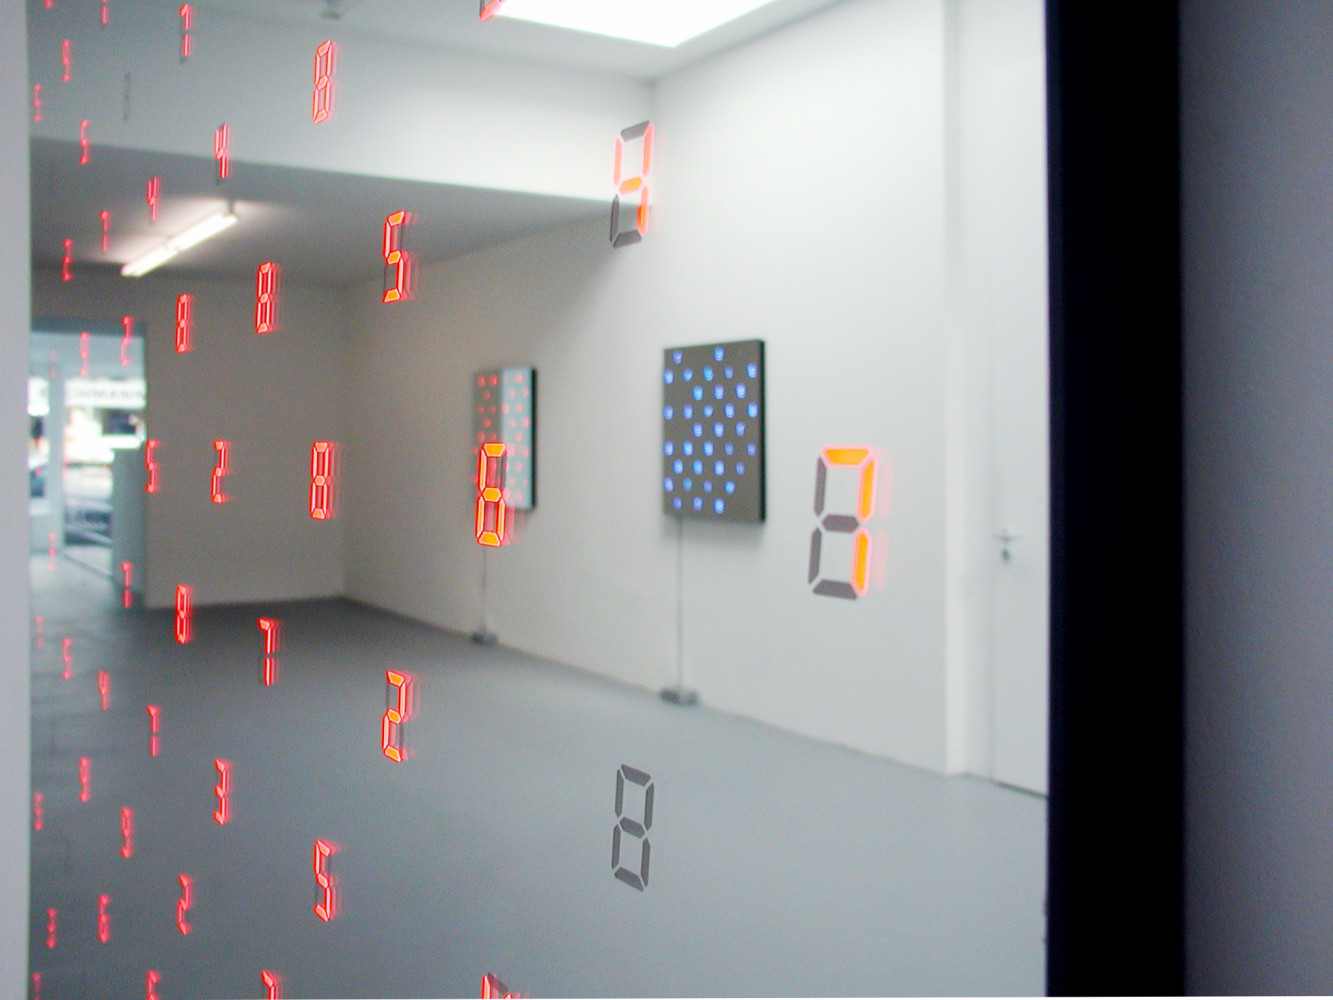 Tatsuo Miyajima, ‘Changing time with changing self’, Installation view, Buchmann Galerie Köln, 2001